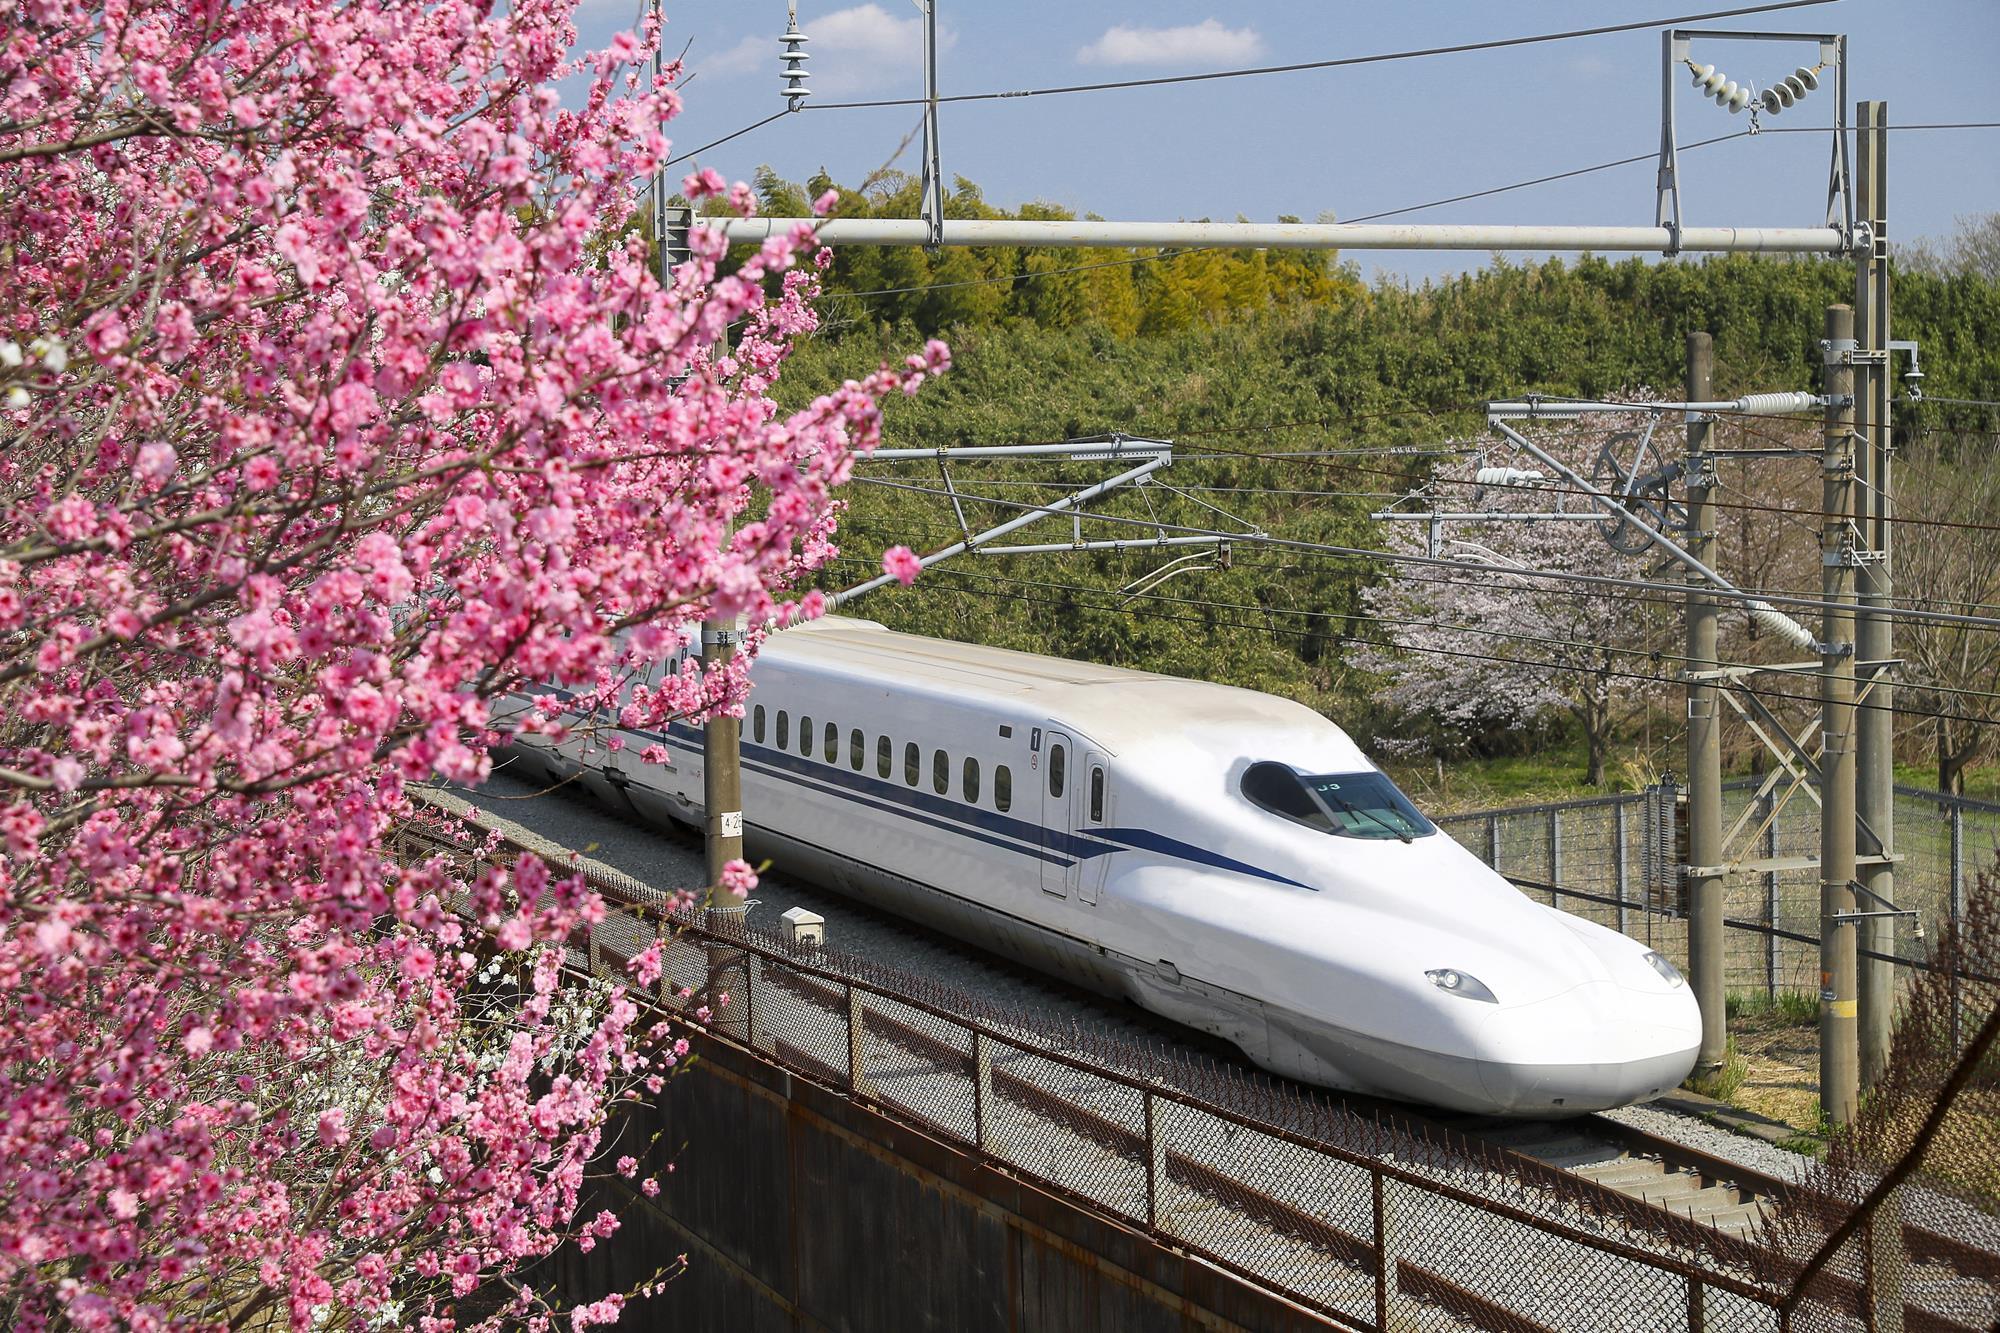 JR Central targeting Tokaido Shinkansen ATO from 2028 | News | Railway Gazette International